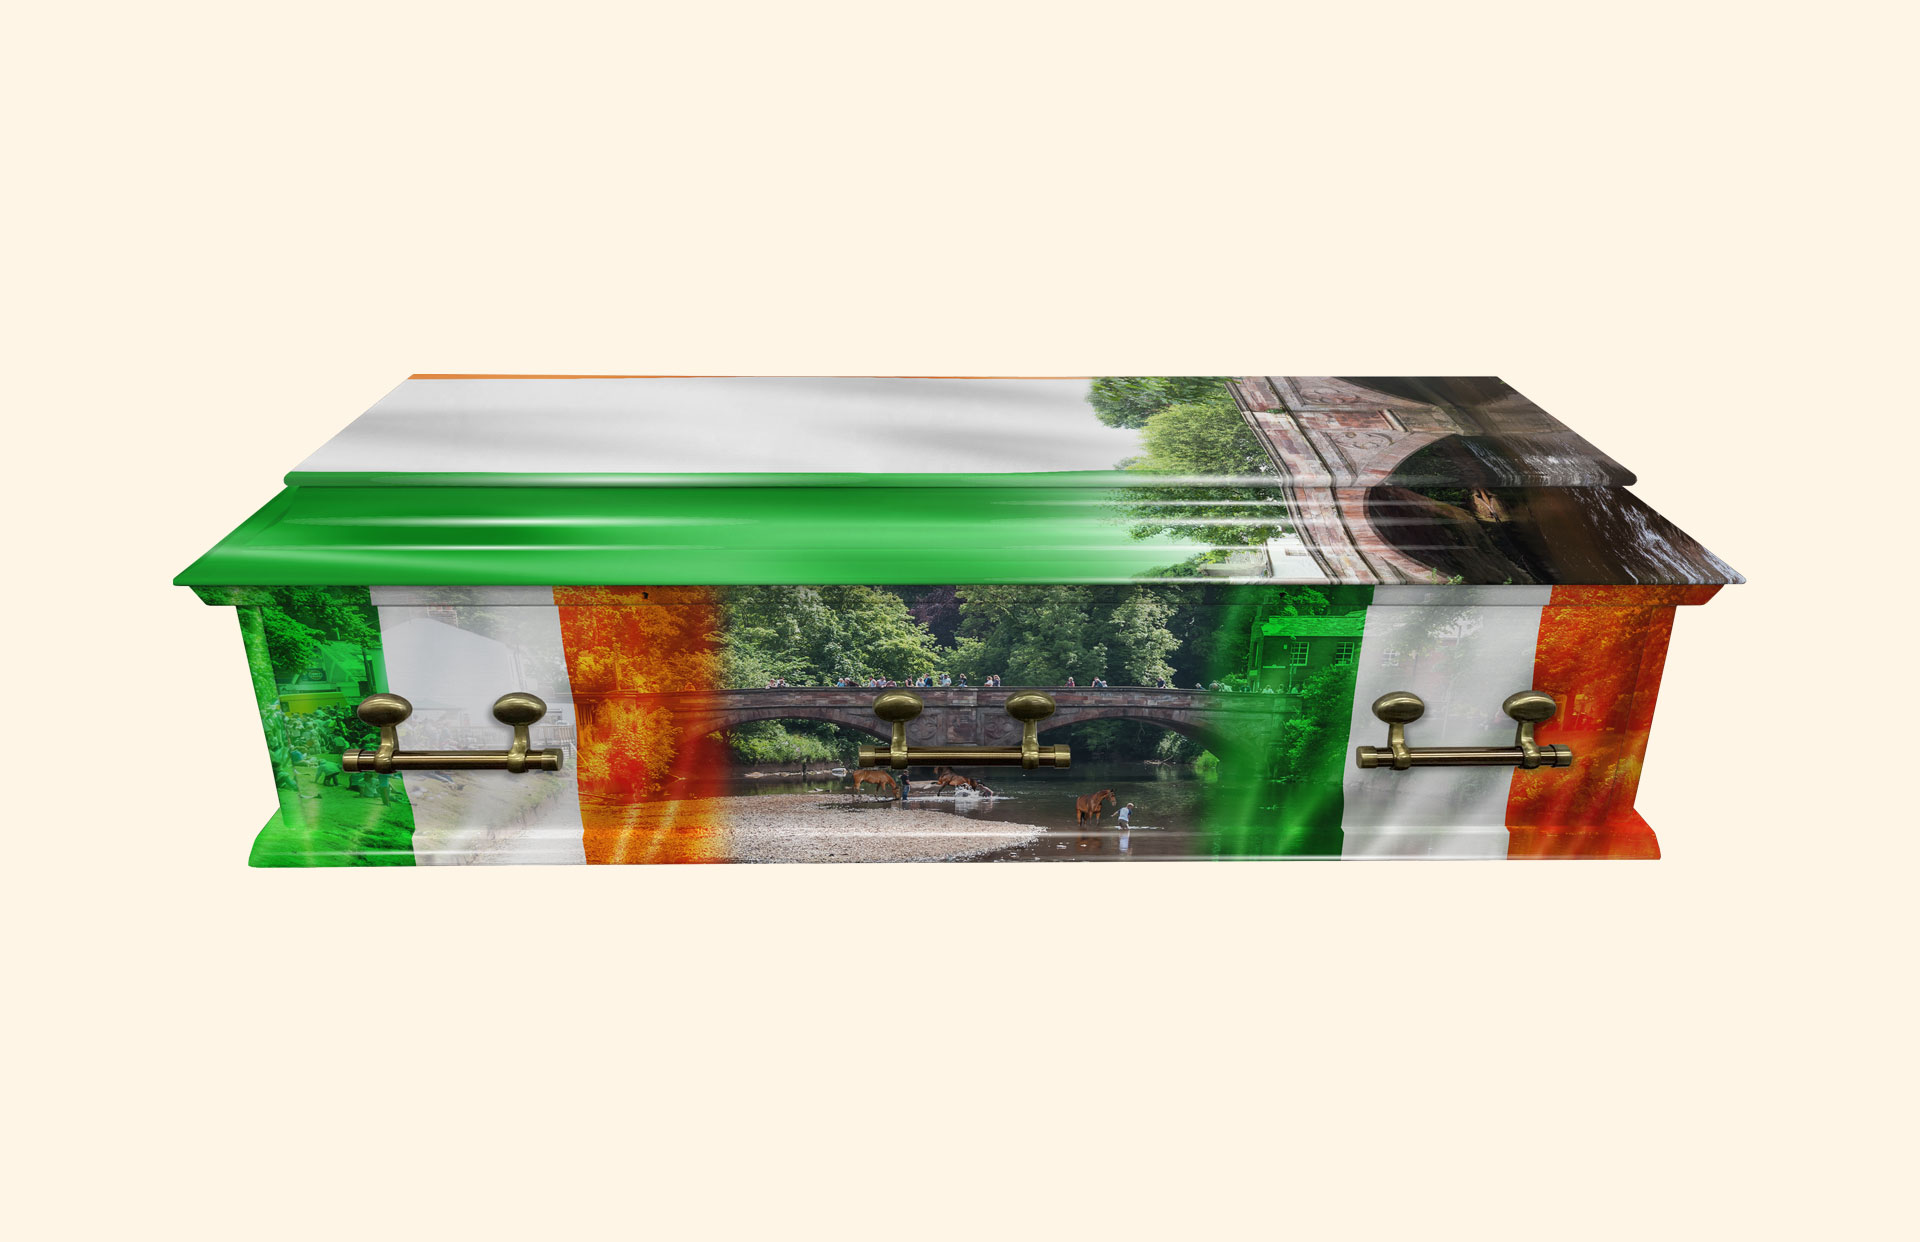 Oxford Appleby American wooden casket